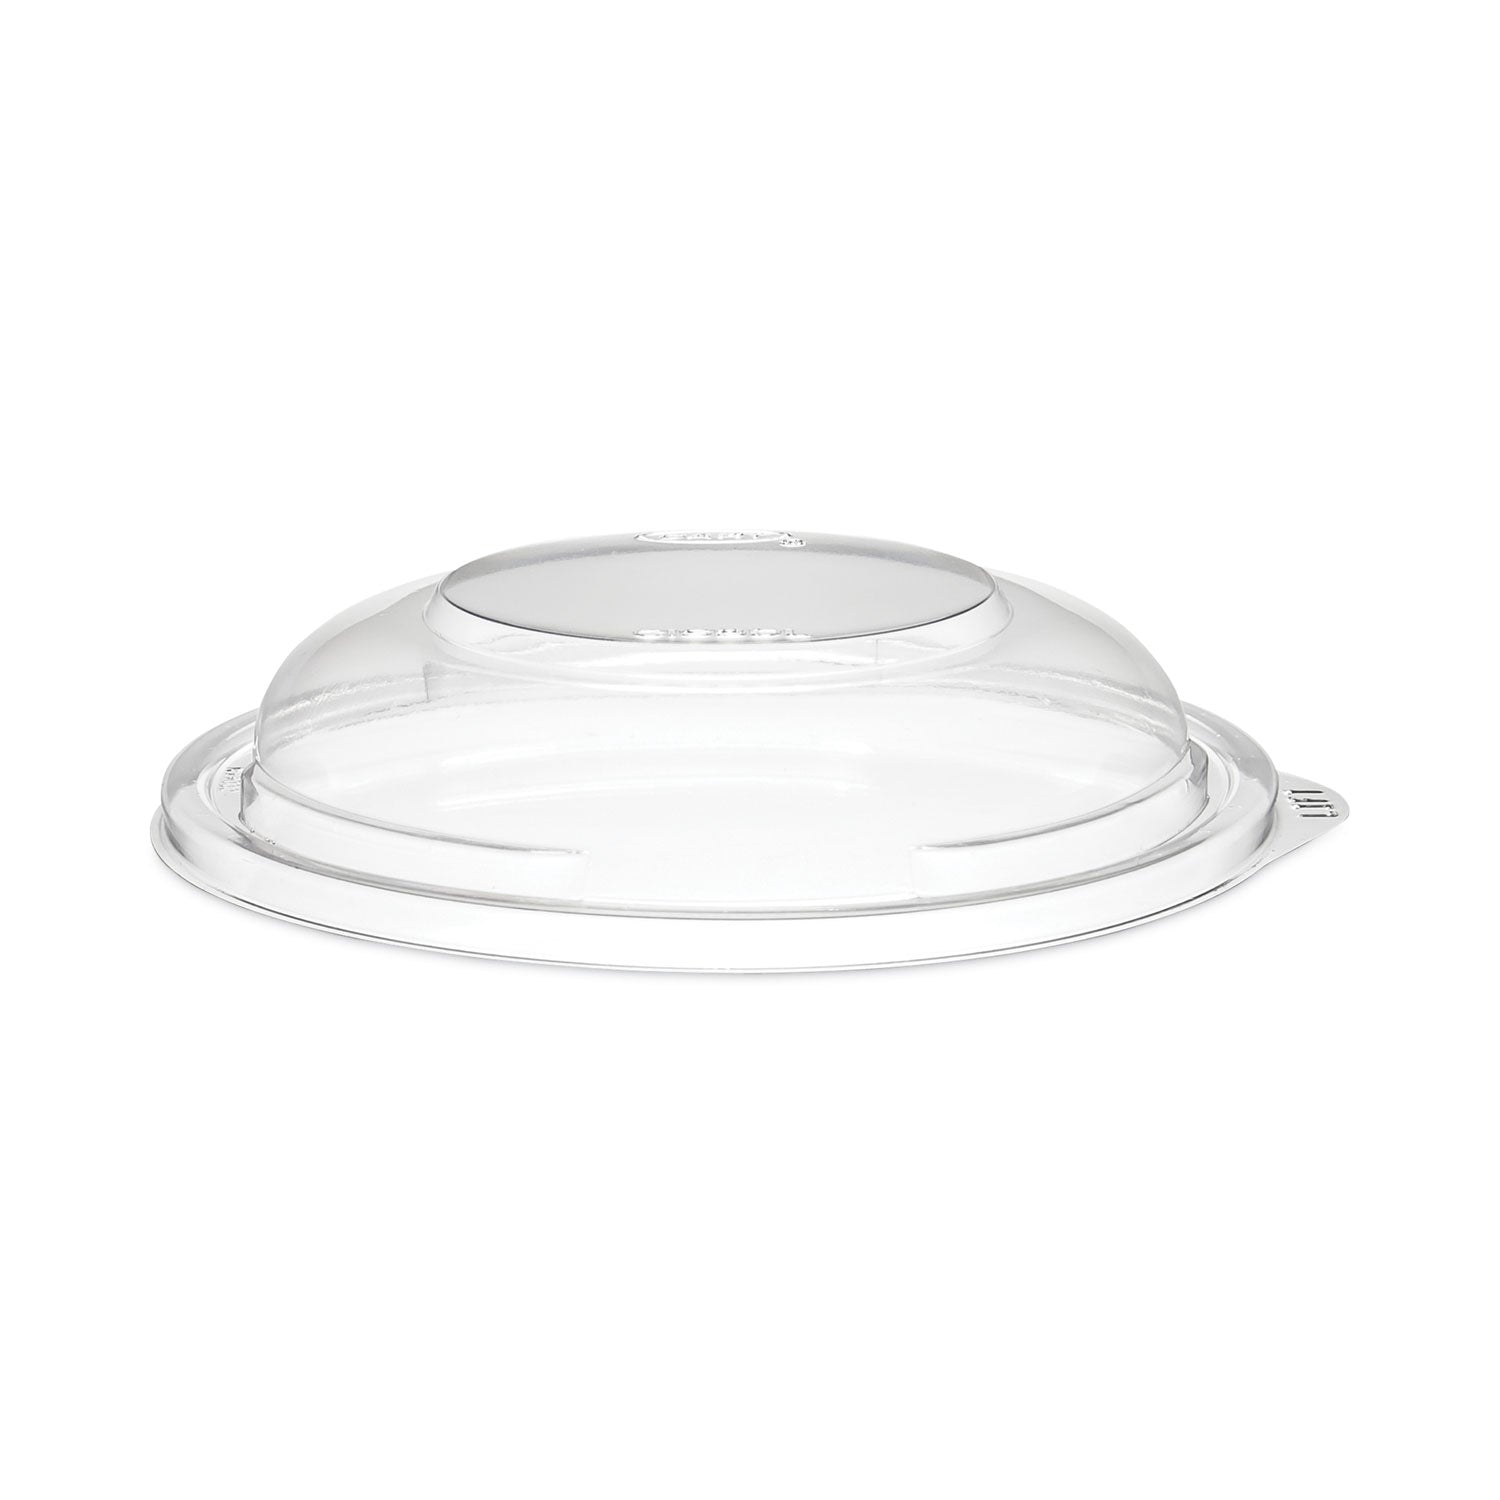 PresentaBowls Clear Dome Lids, 5.4 Diameter x 1.1 h, Plastic, 504/Carton - 